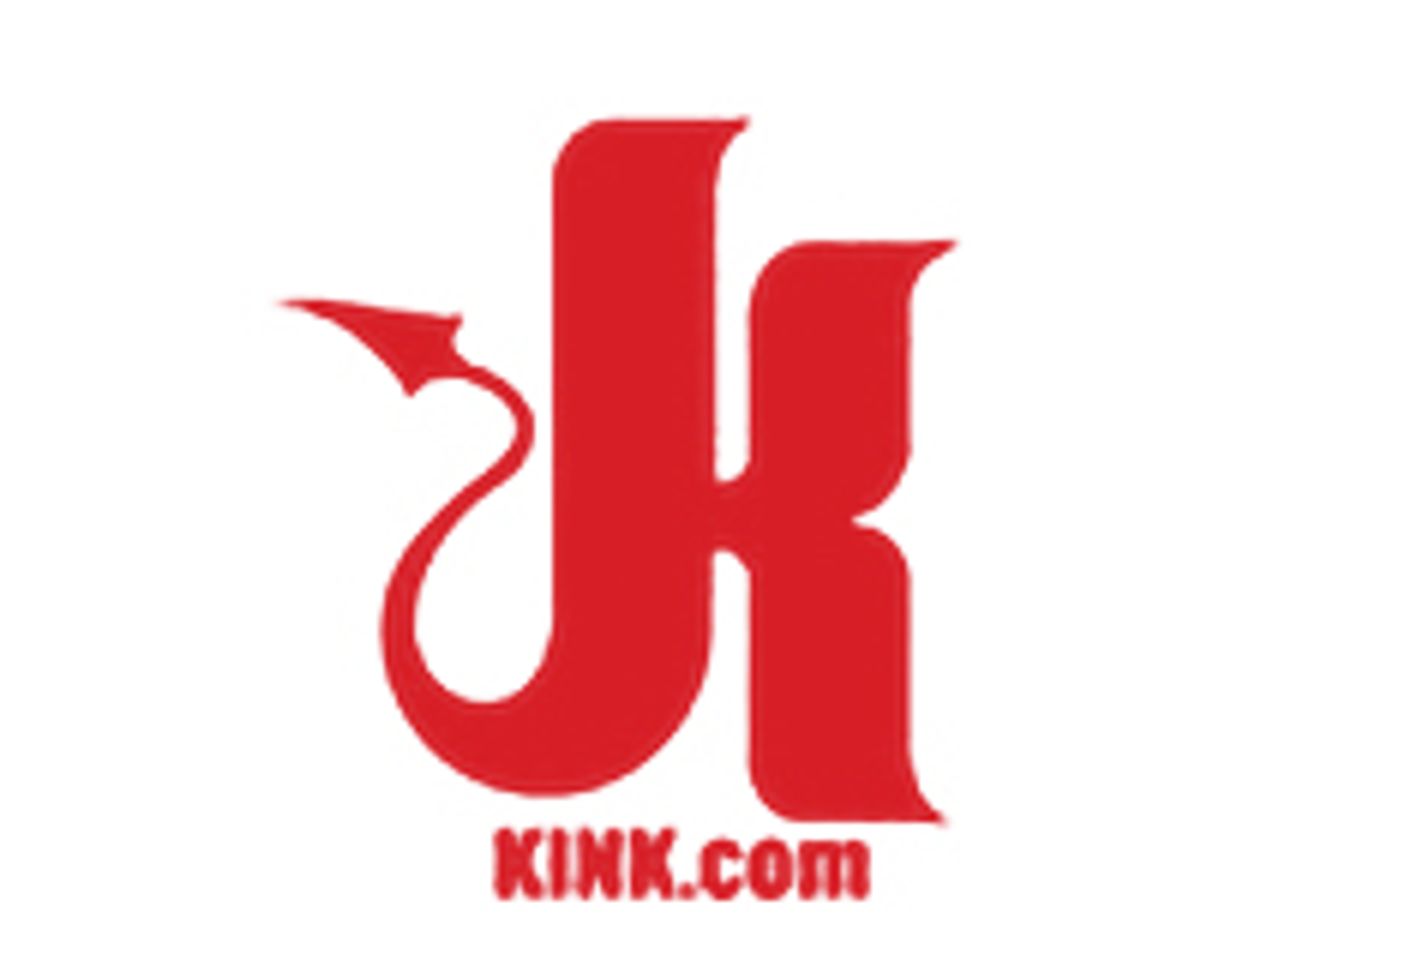 Kink.com Serves Hot Gay Sex for Thanksgiving at KinkMen.com